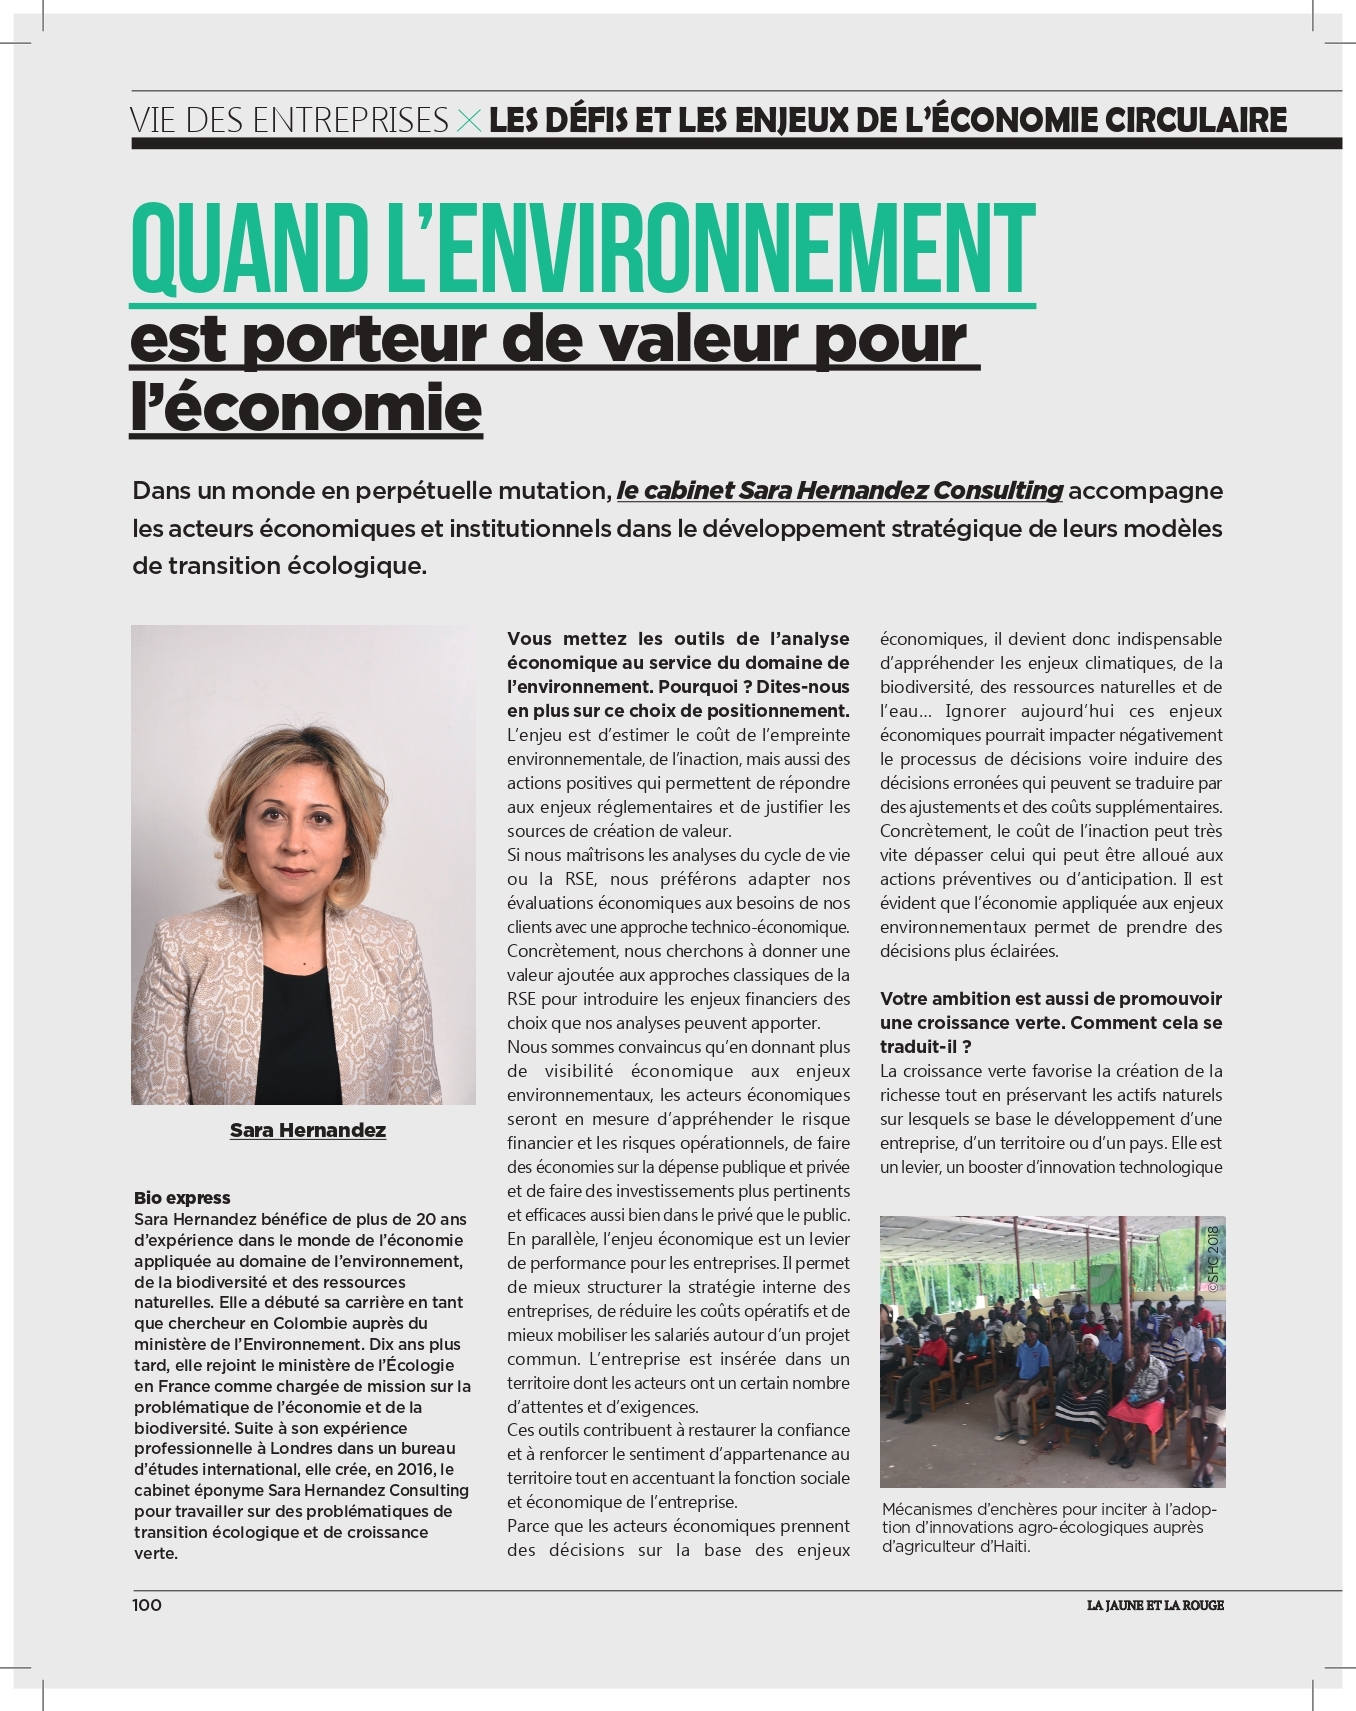 La jaune et la rouge, February 2019: When the environment is valuable for the economy